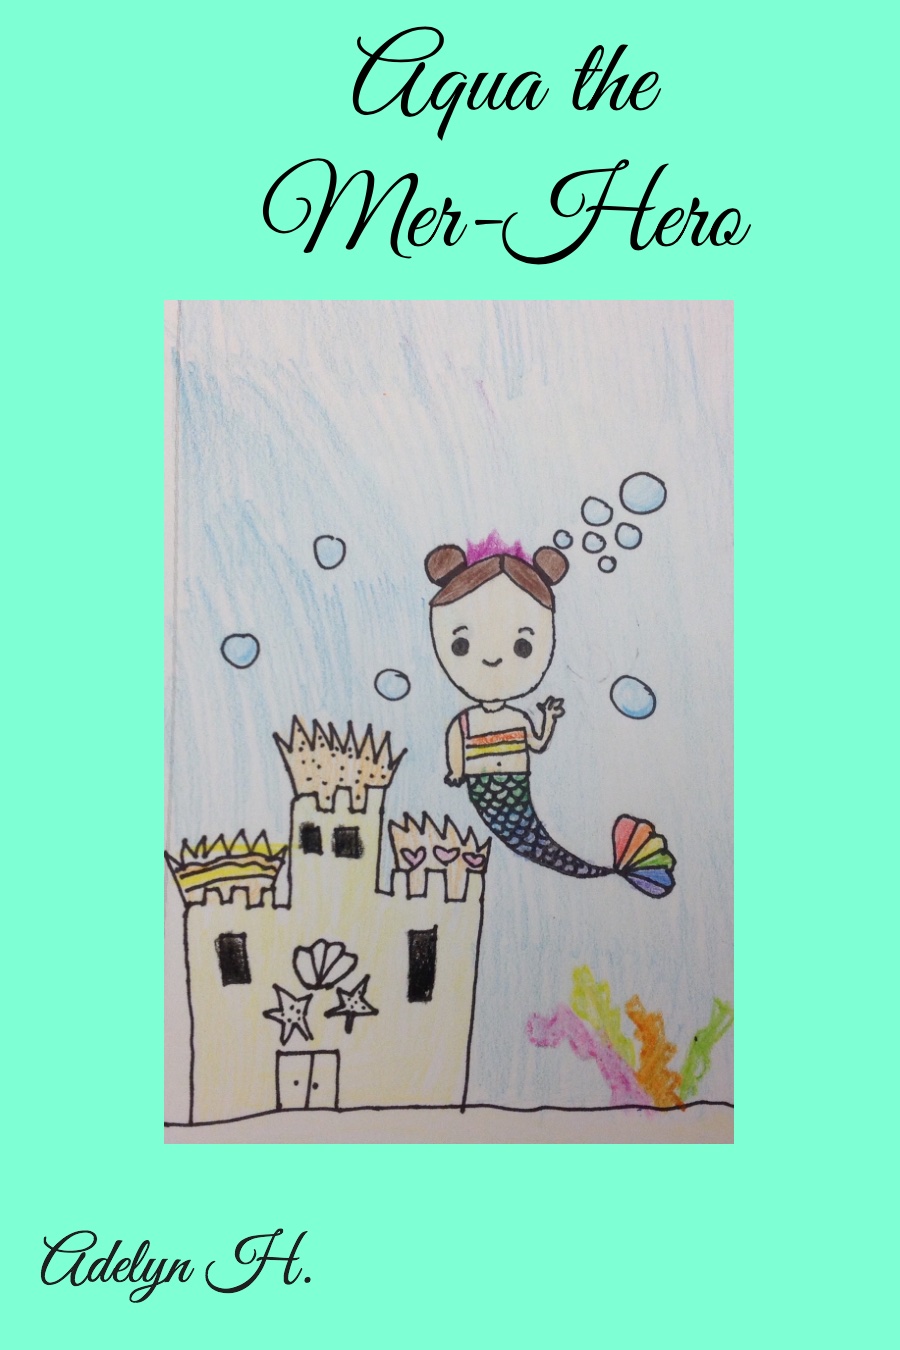 Aqua the Mer-Hero by Adelyn H